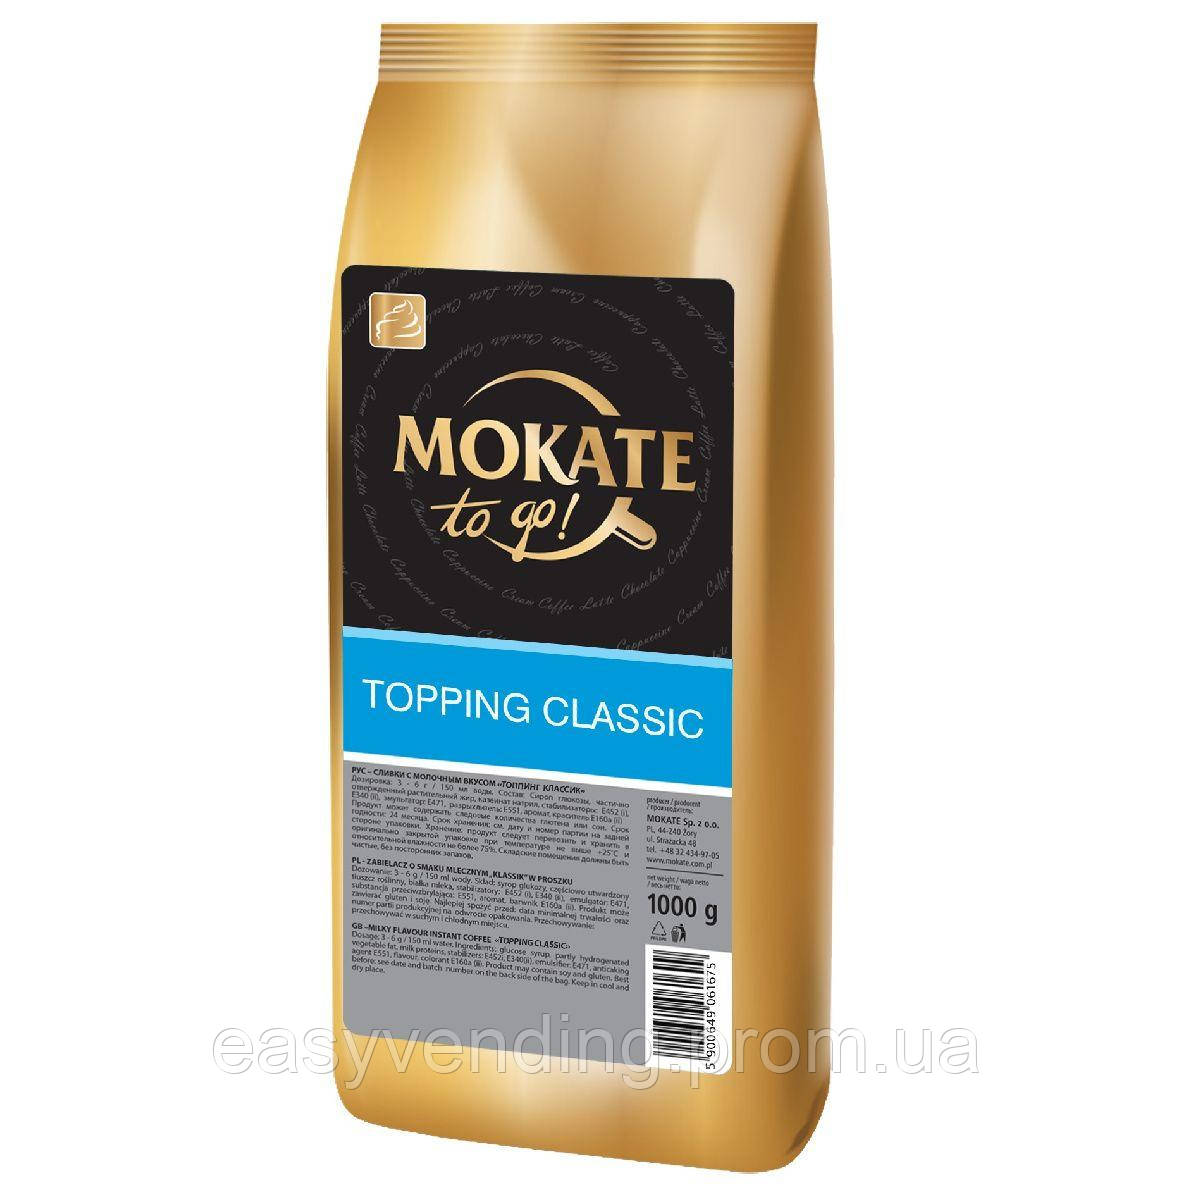 Вершки Mokate Topping Classic, 1 кг